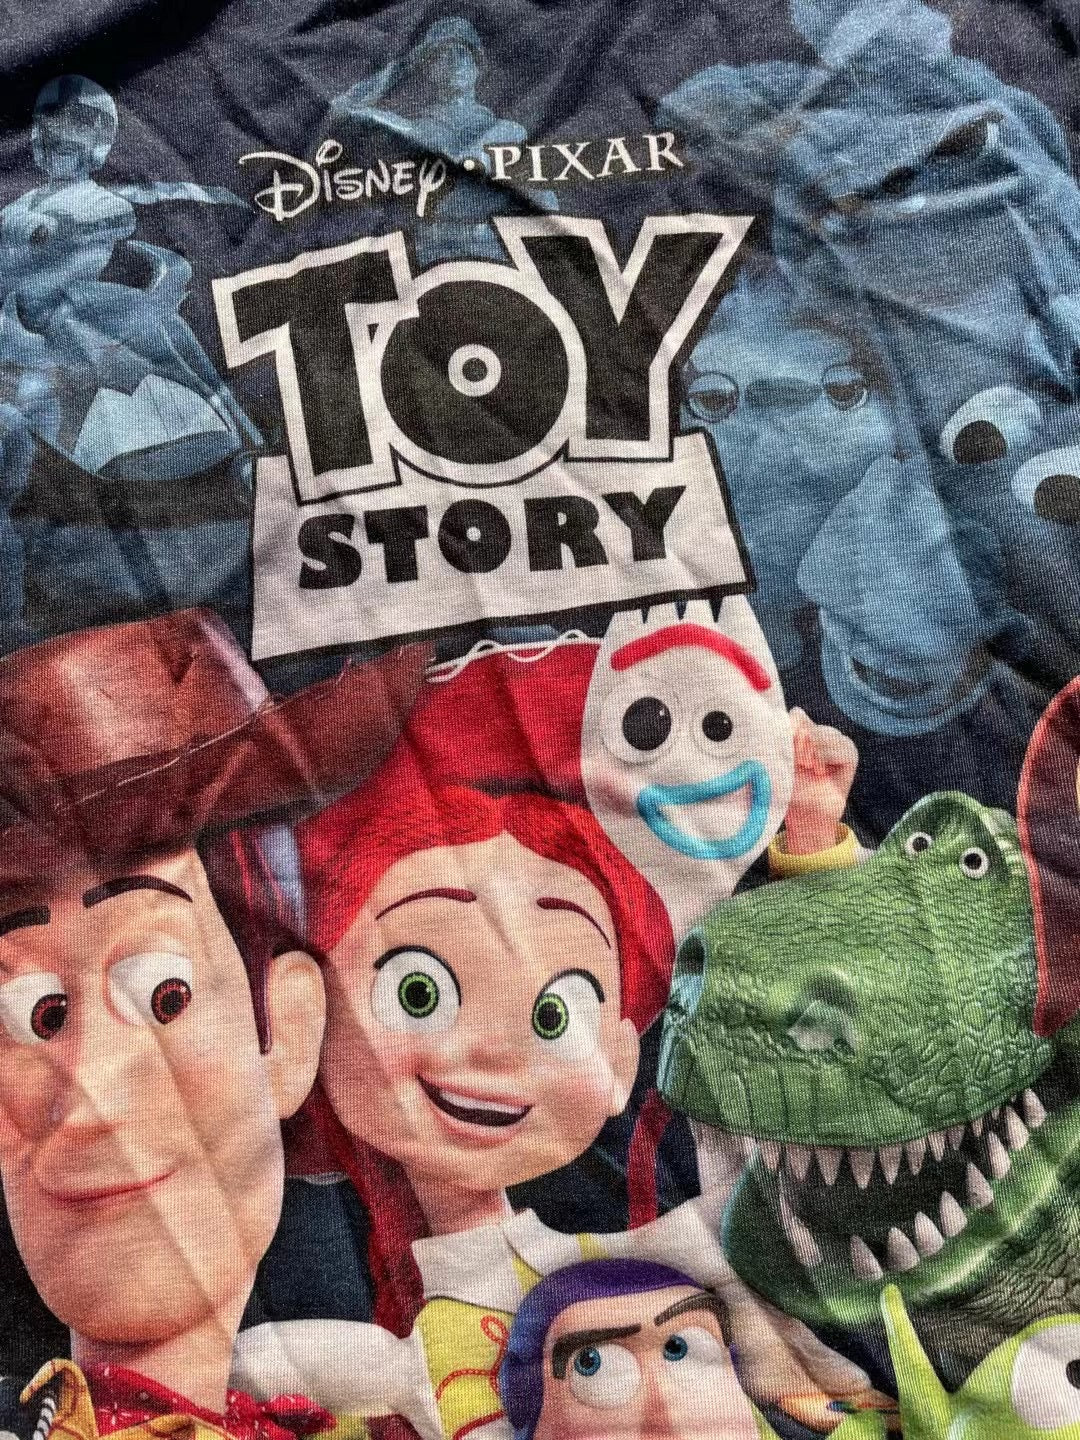 Toy Story T-Shirt A10434J